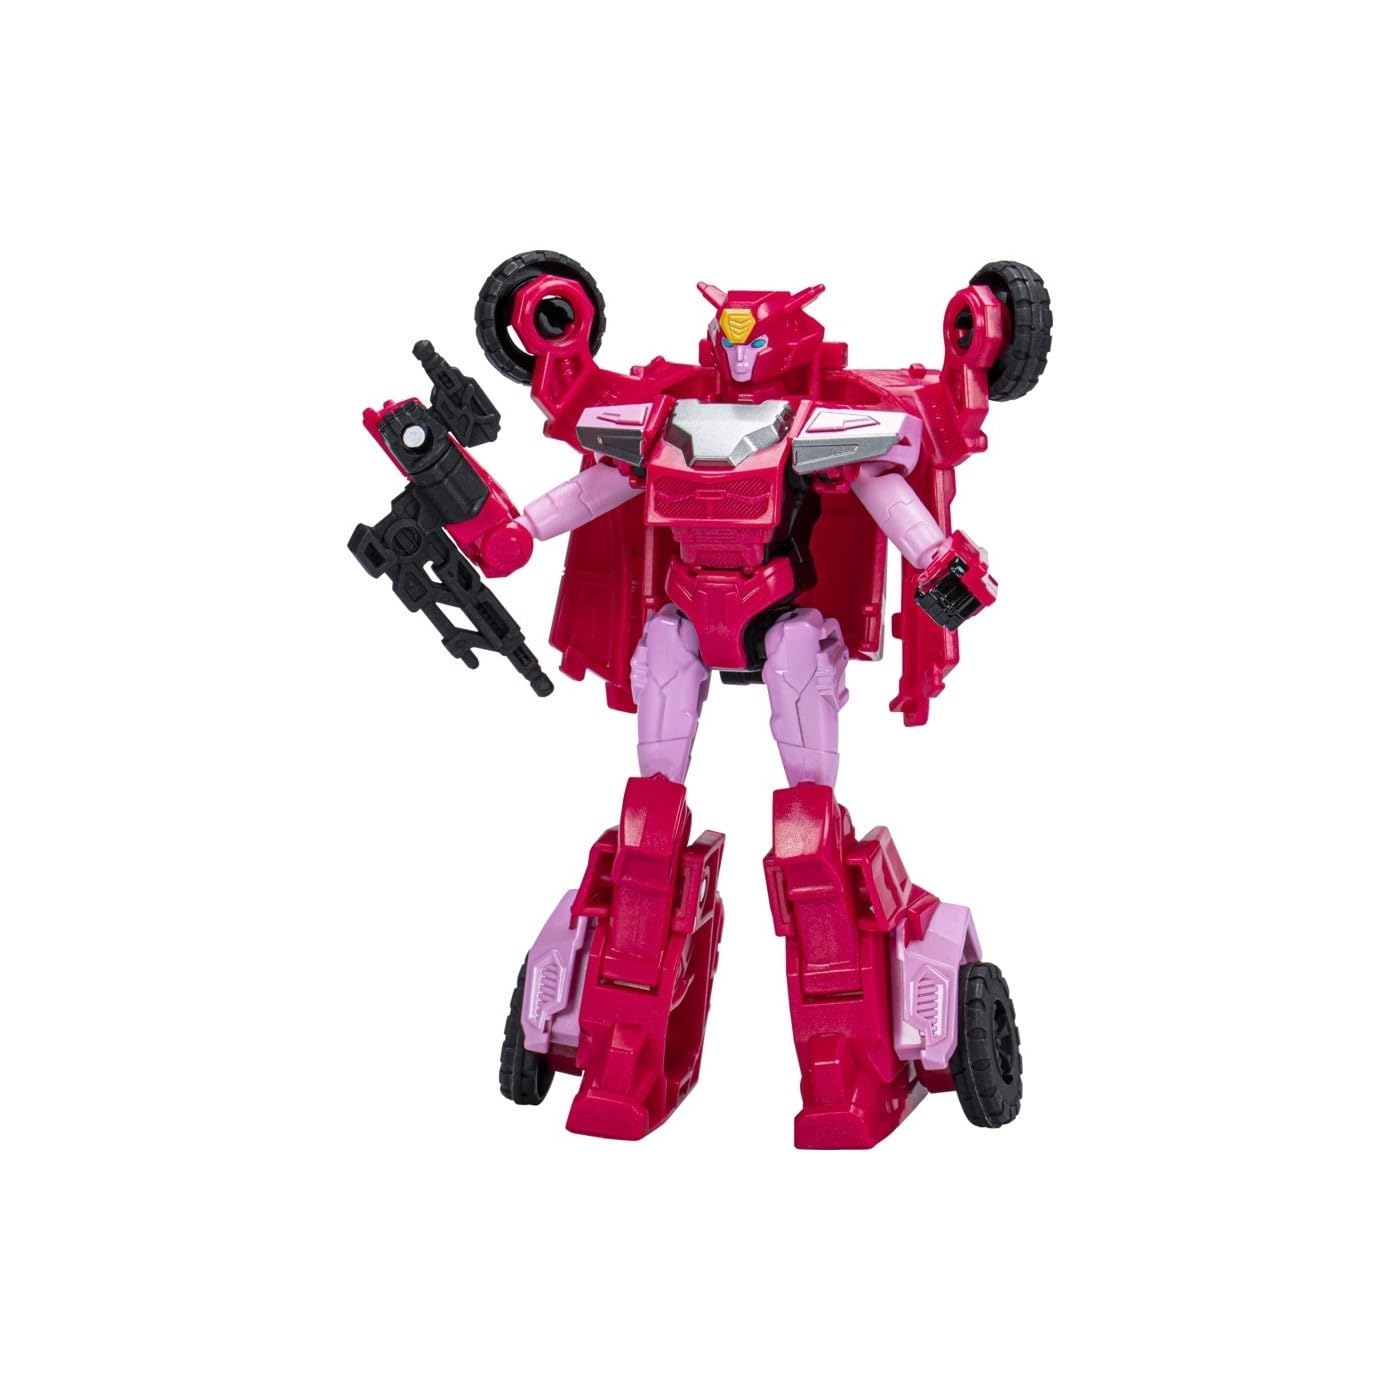 5" Transformers EarthSpark Warrior Toy $3.33 + Free Shipping w/ Walmart+ or $35+